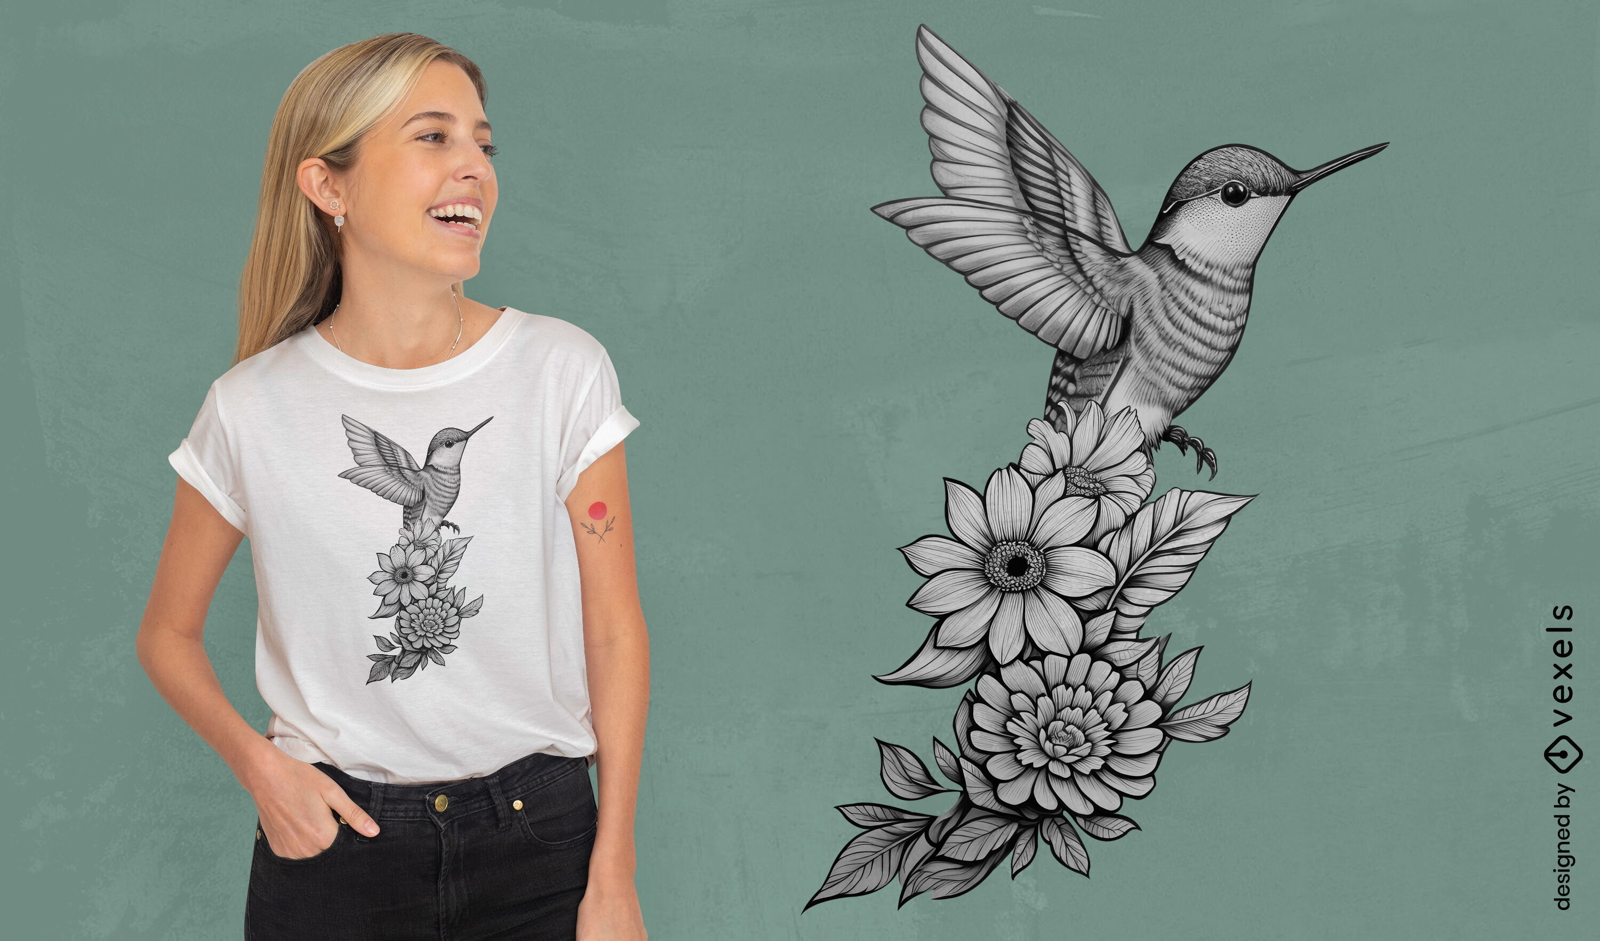 Diseño de camiseta de colibrí con flores.